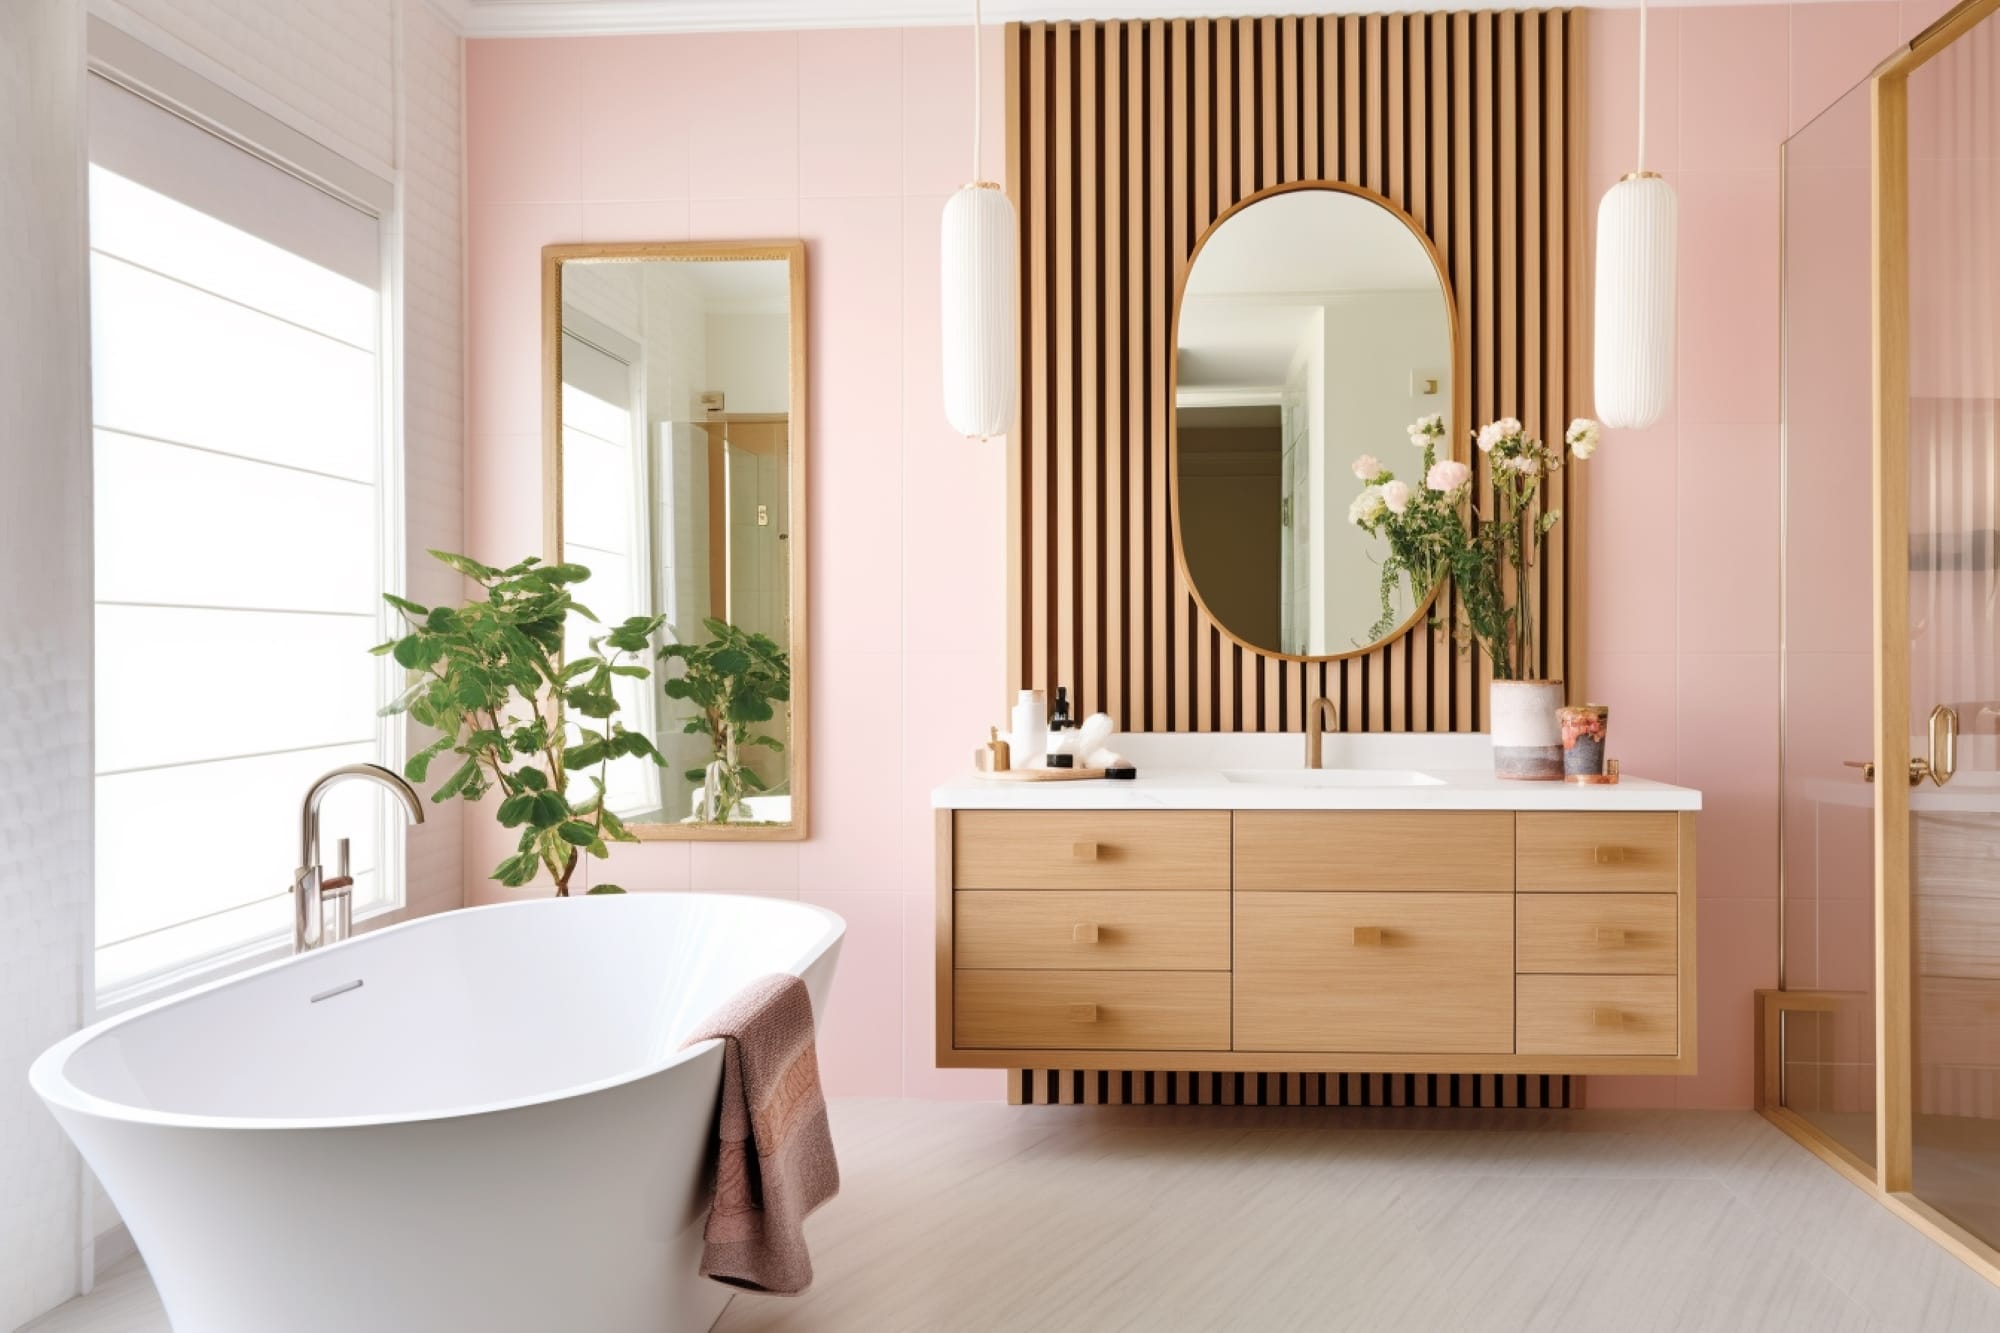 20 Fresh Bathroom Inspiration Ideas to Kickstart Your Design